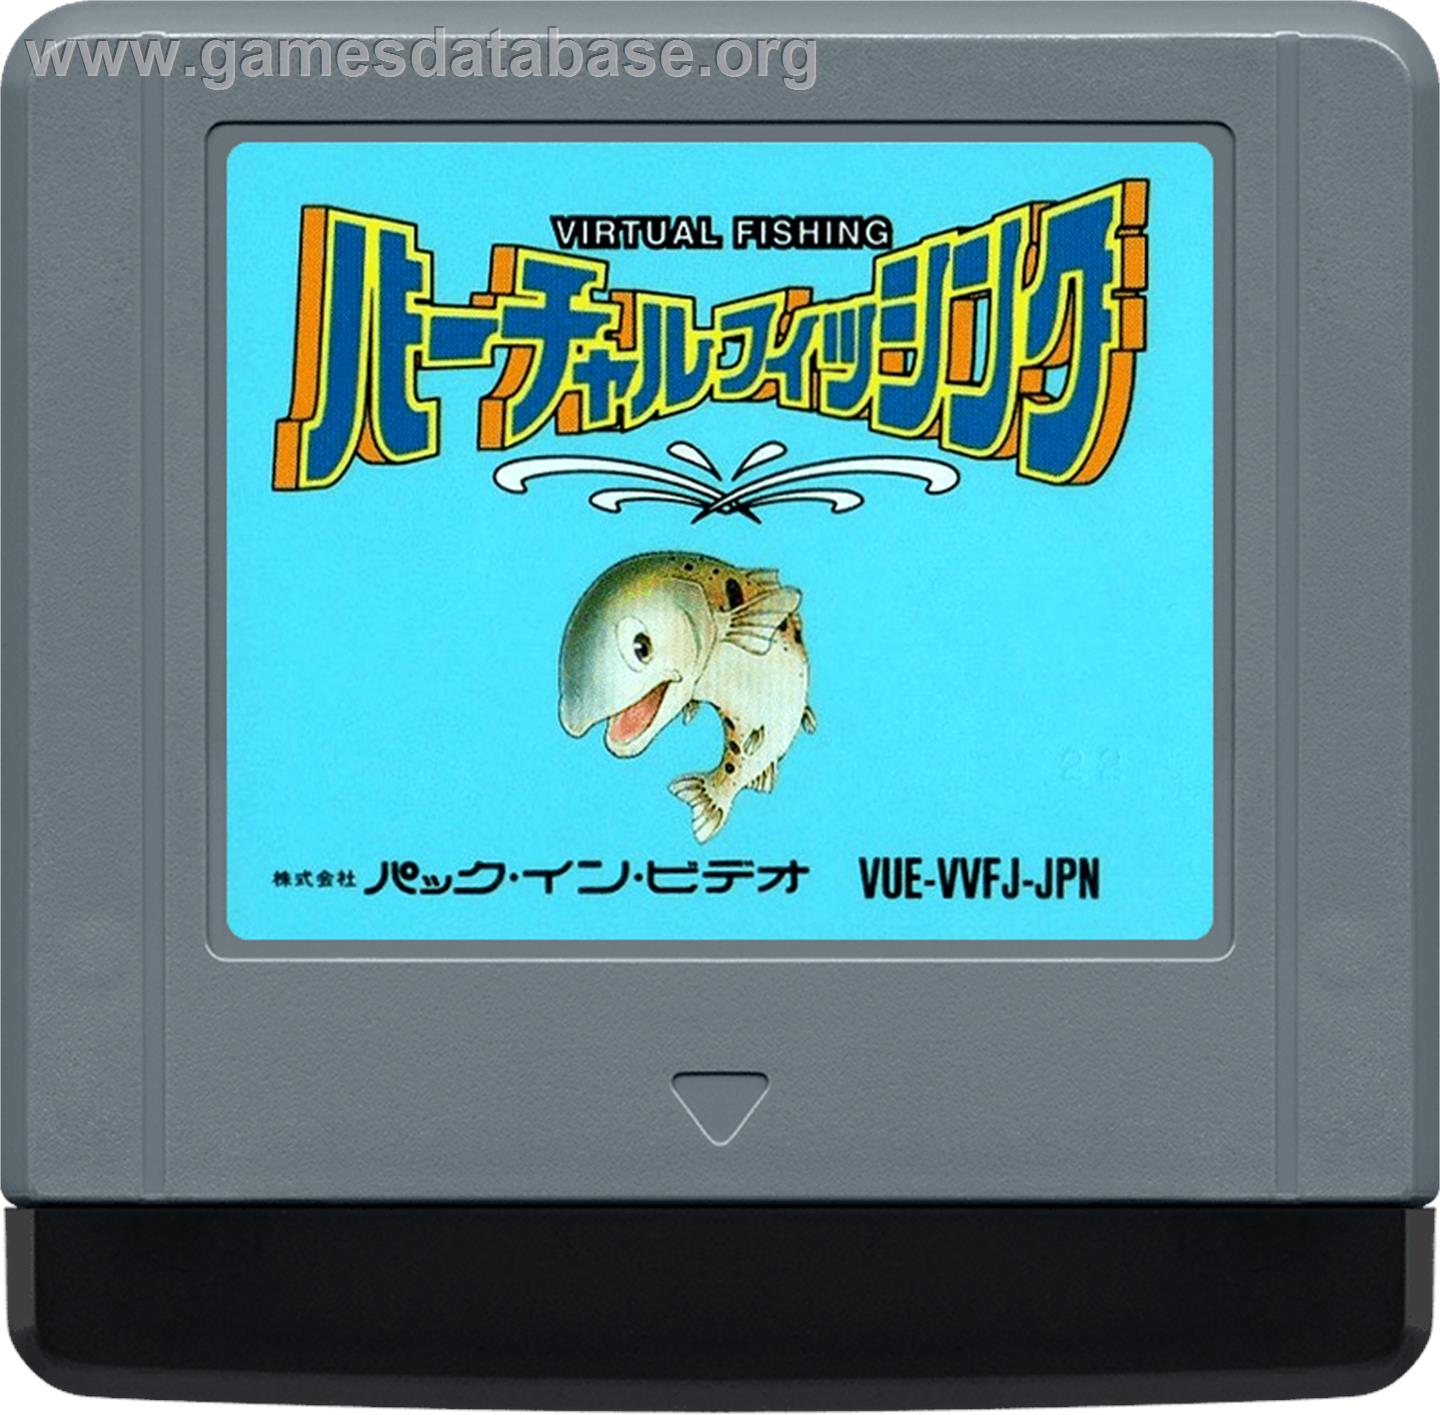 Virtual Fishing - Nintendo Virtual Boy - Artwork - Cartridge